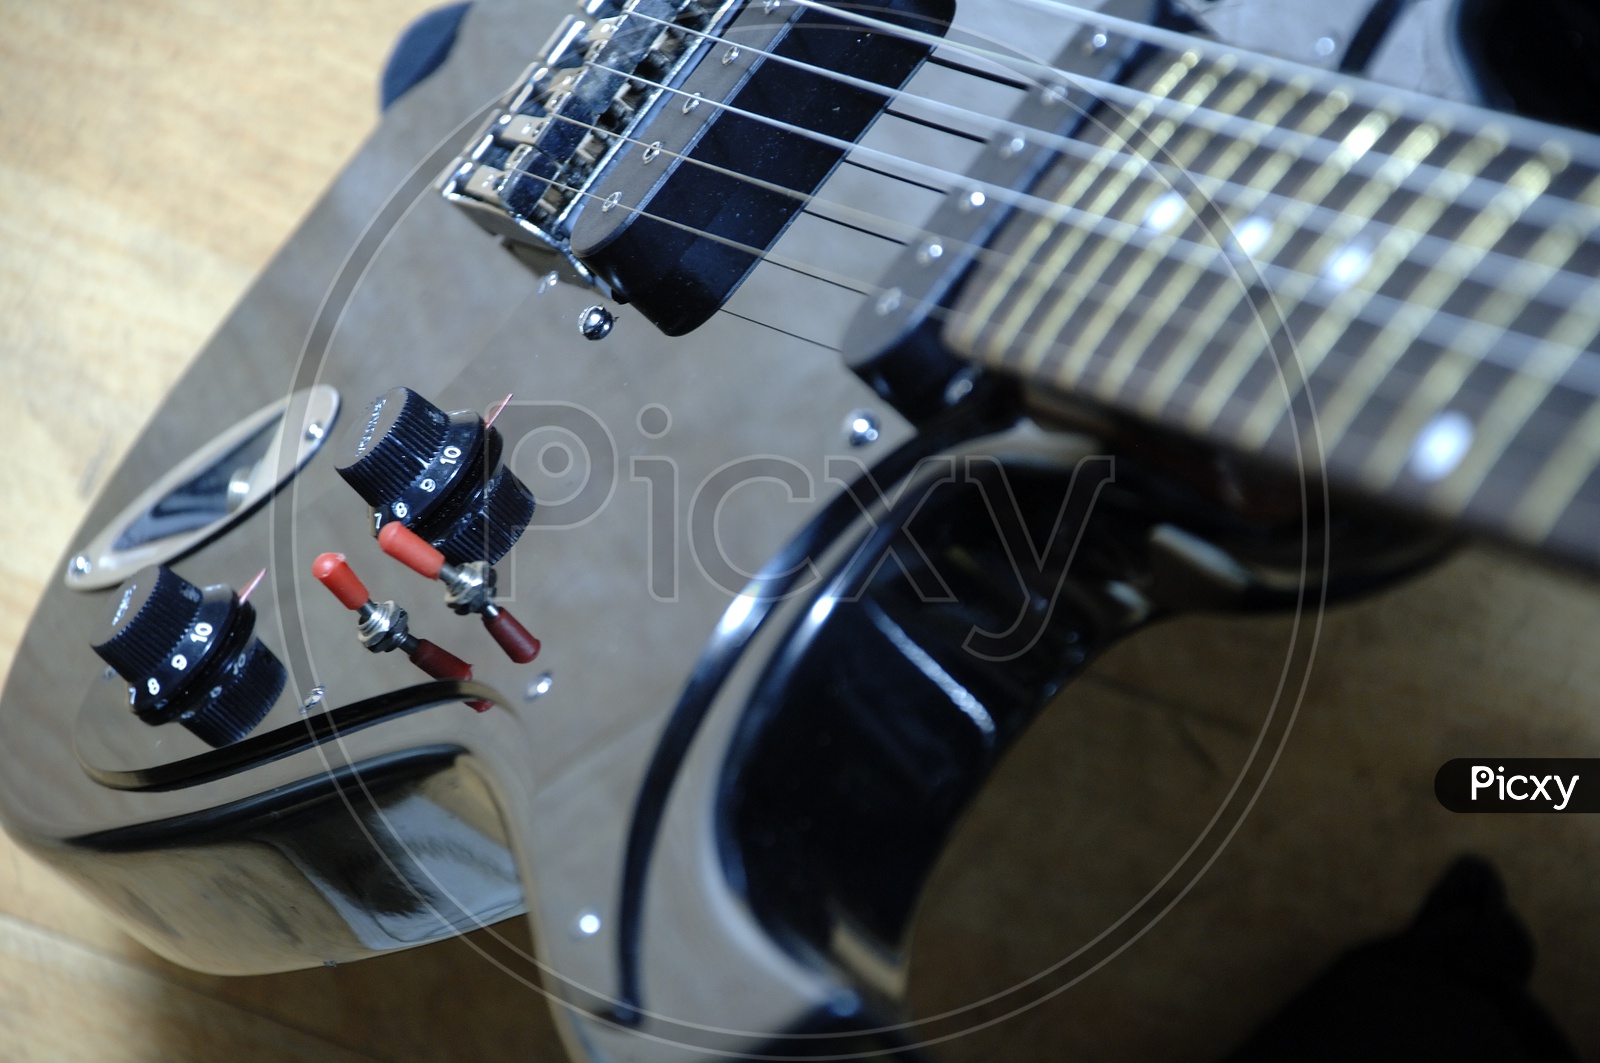 Electric Guitar